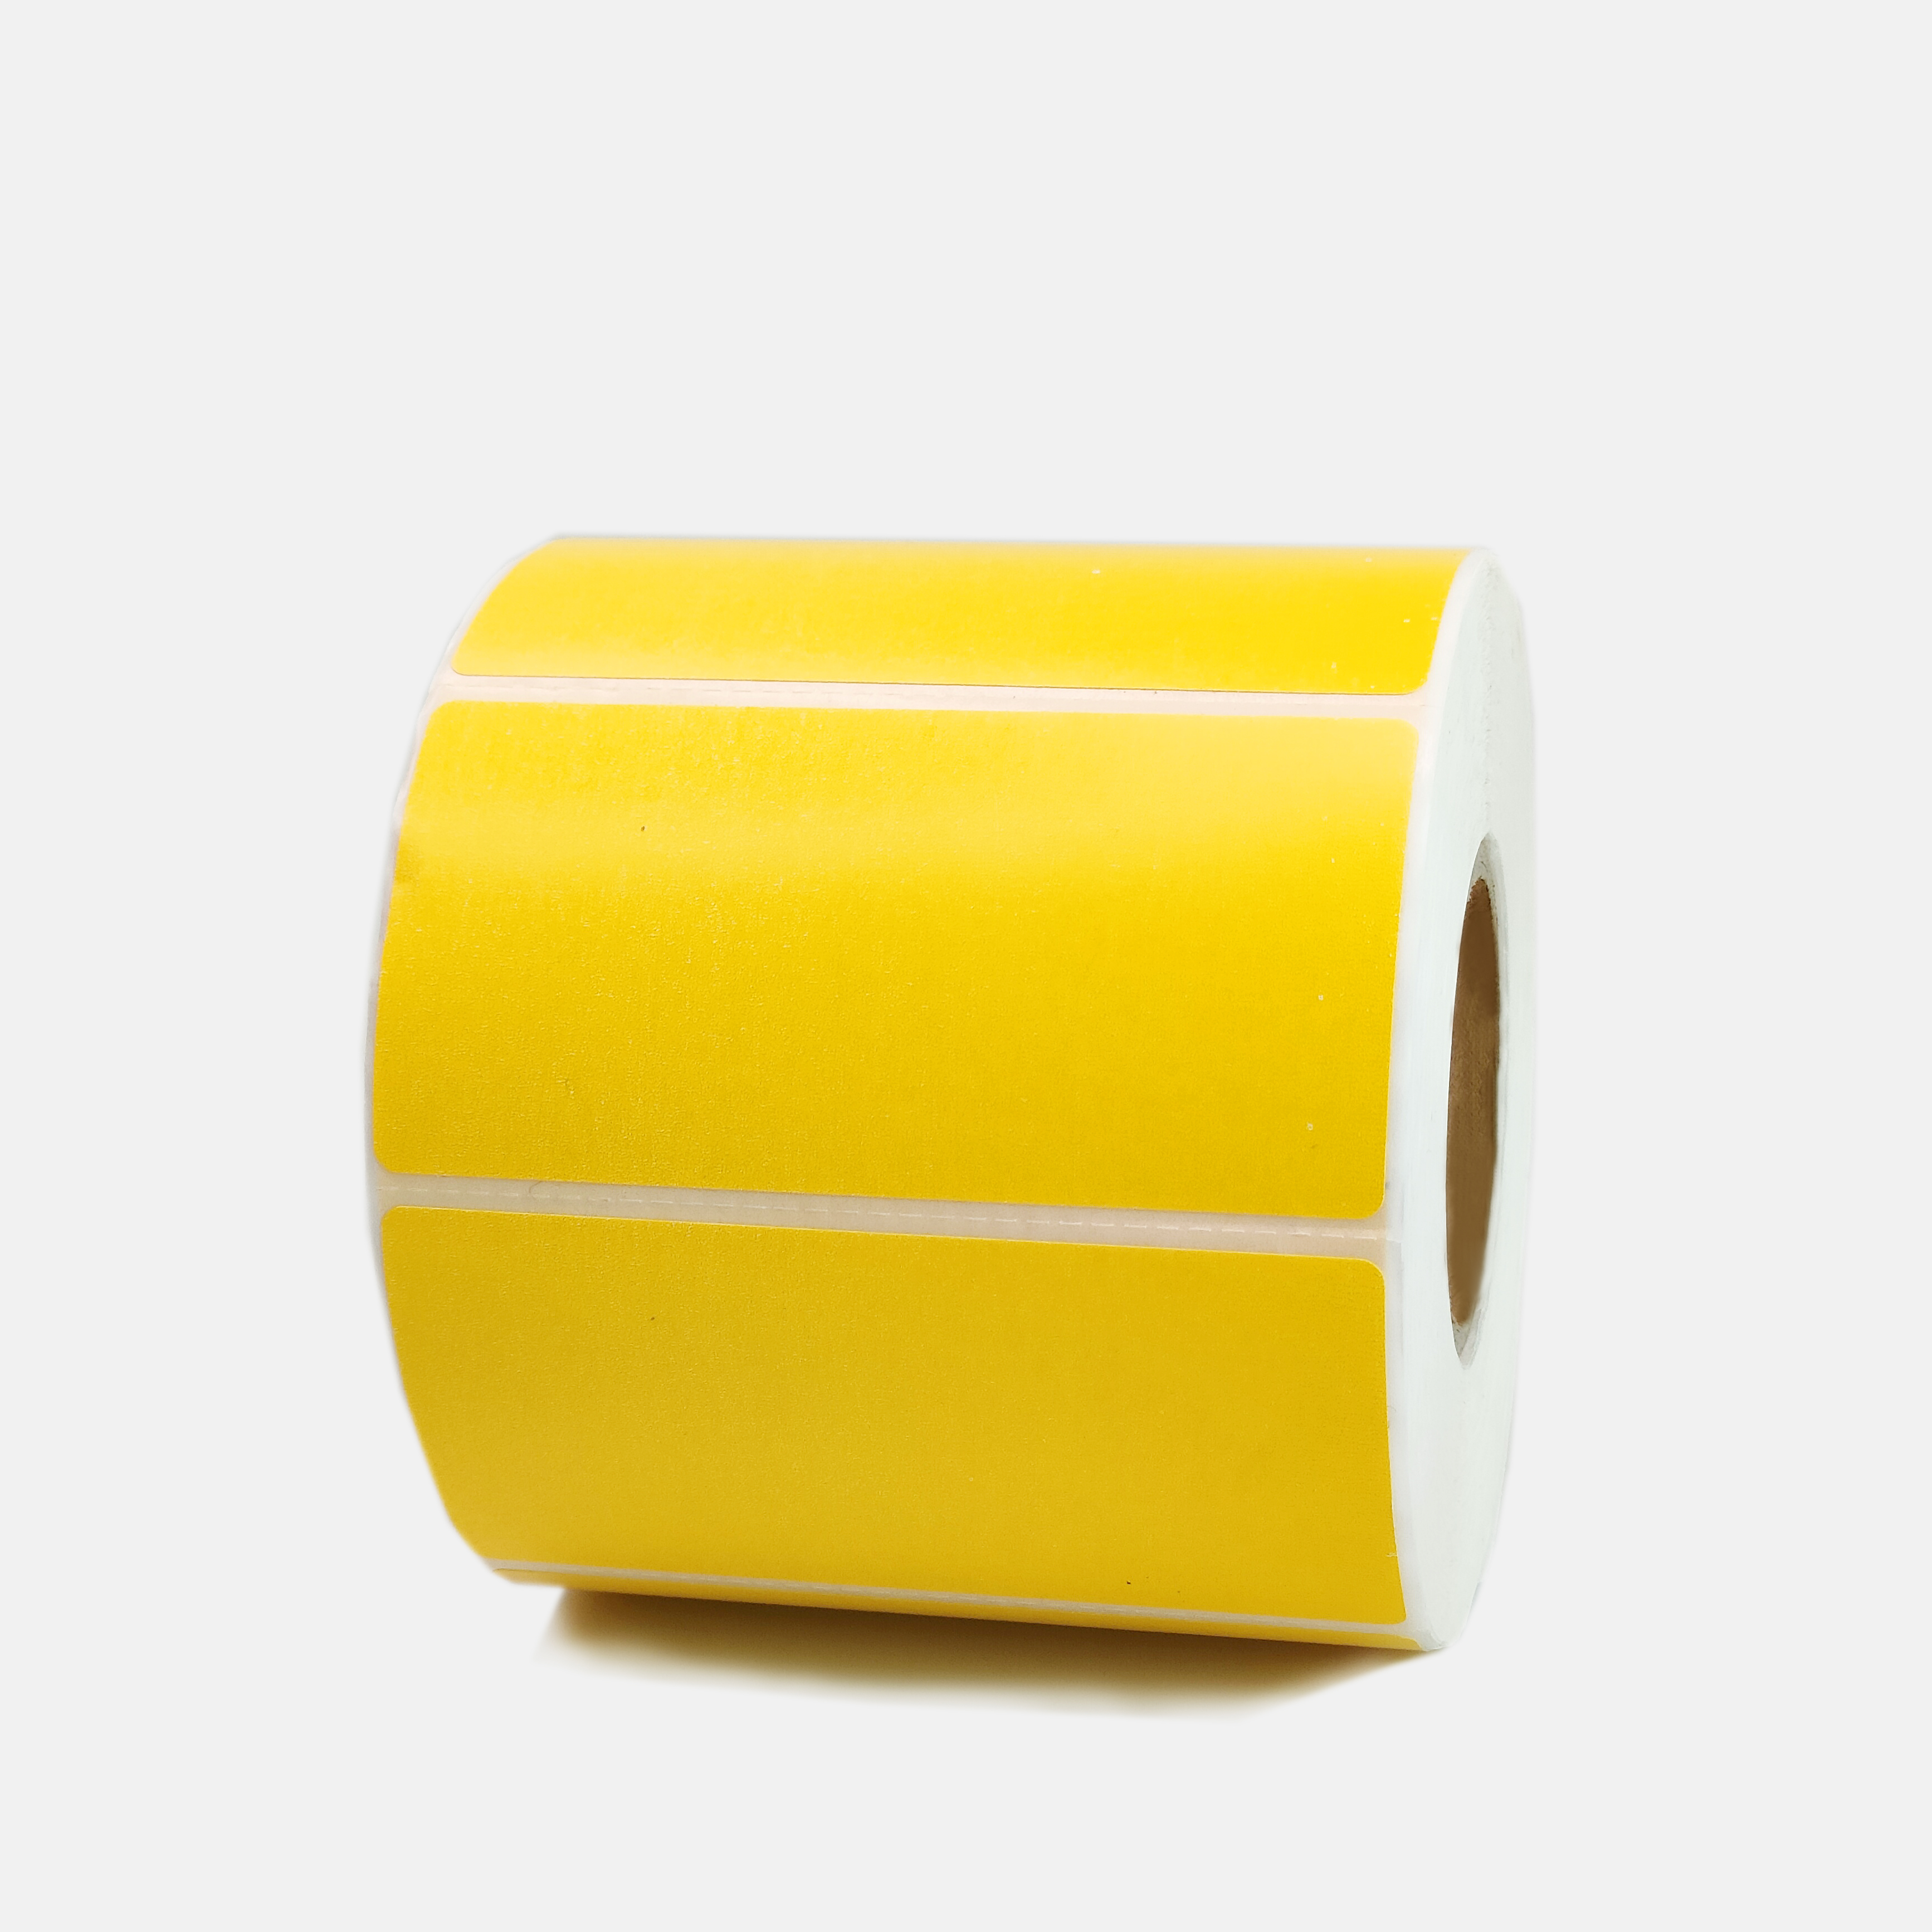 100* 25 mm Waterproof Custom Color Thermal Printer Labels sticker rolls